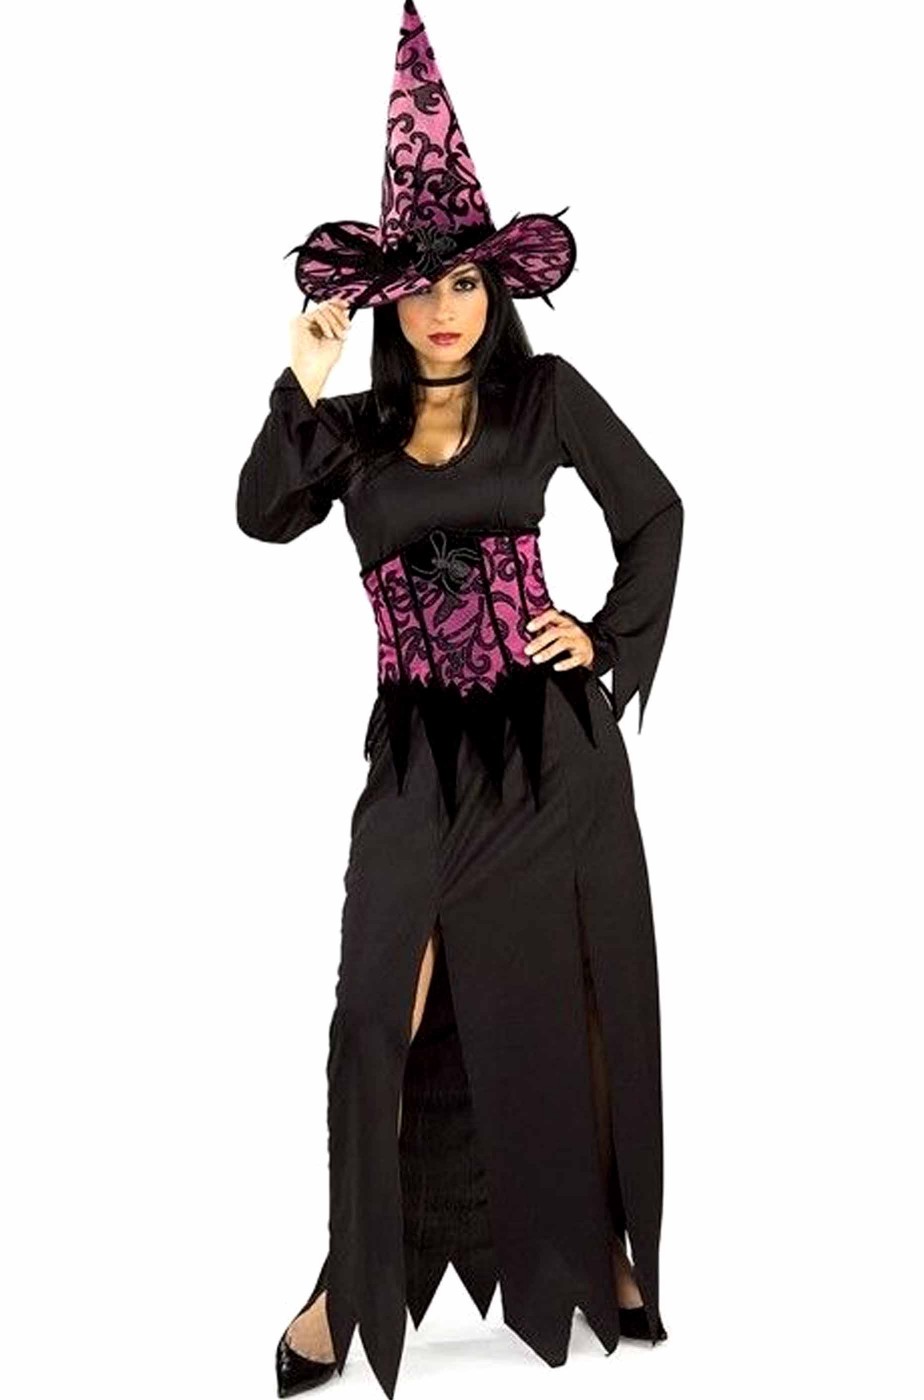 https://carnivalhalloween.com/22073-large_default/Vestito-halloween-donna-strega-elegante-corpetto-cappello.jpg